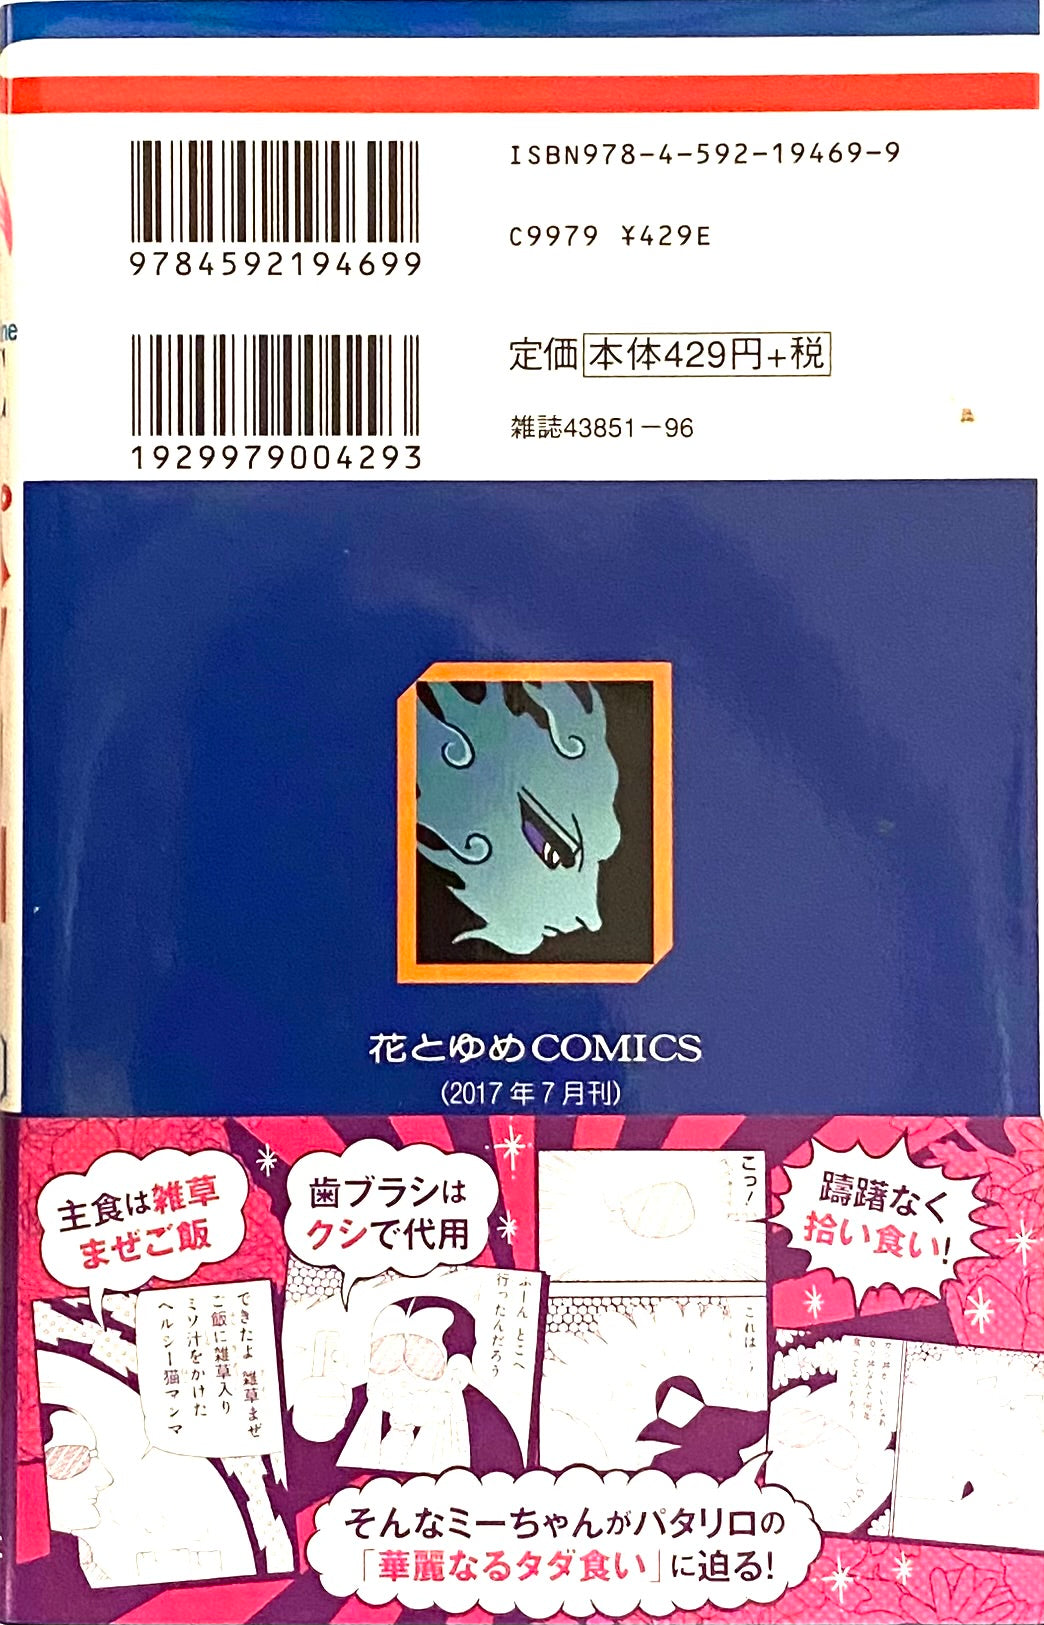 Patalliro Vol.98-Official Japanese Edition